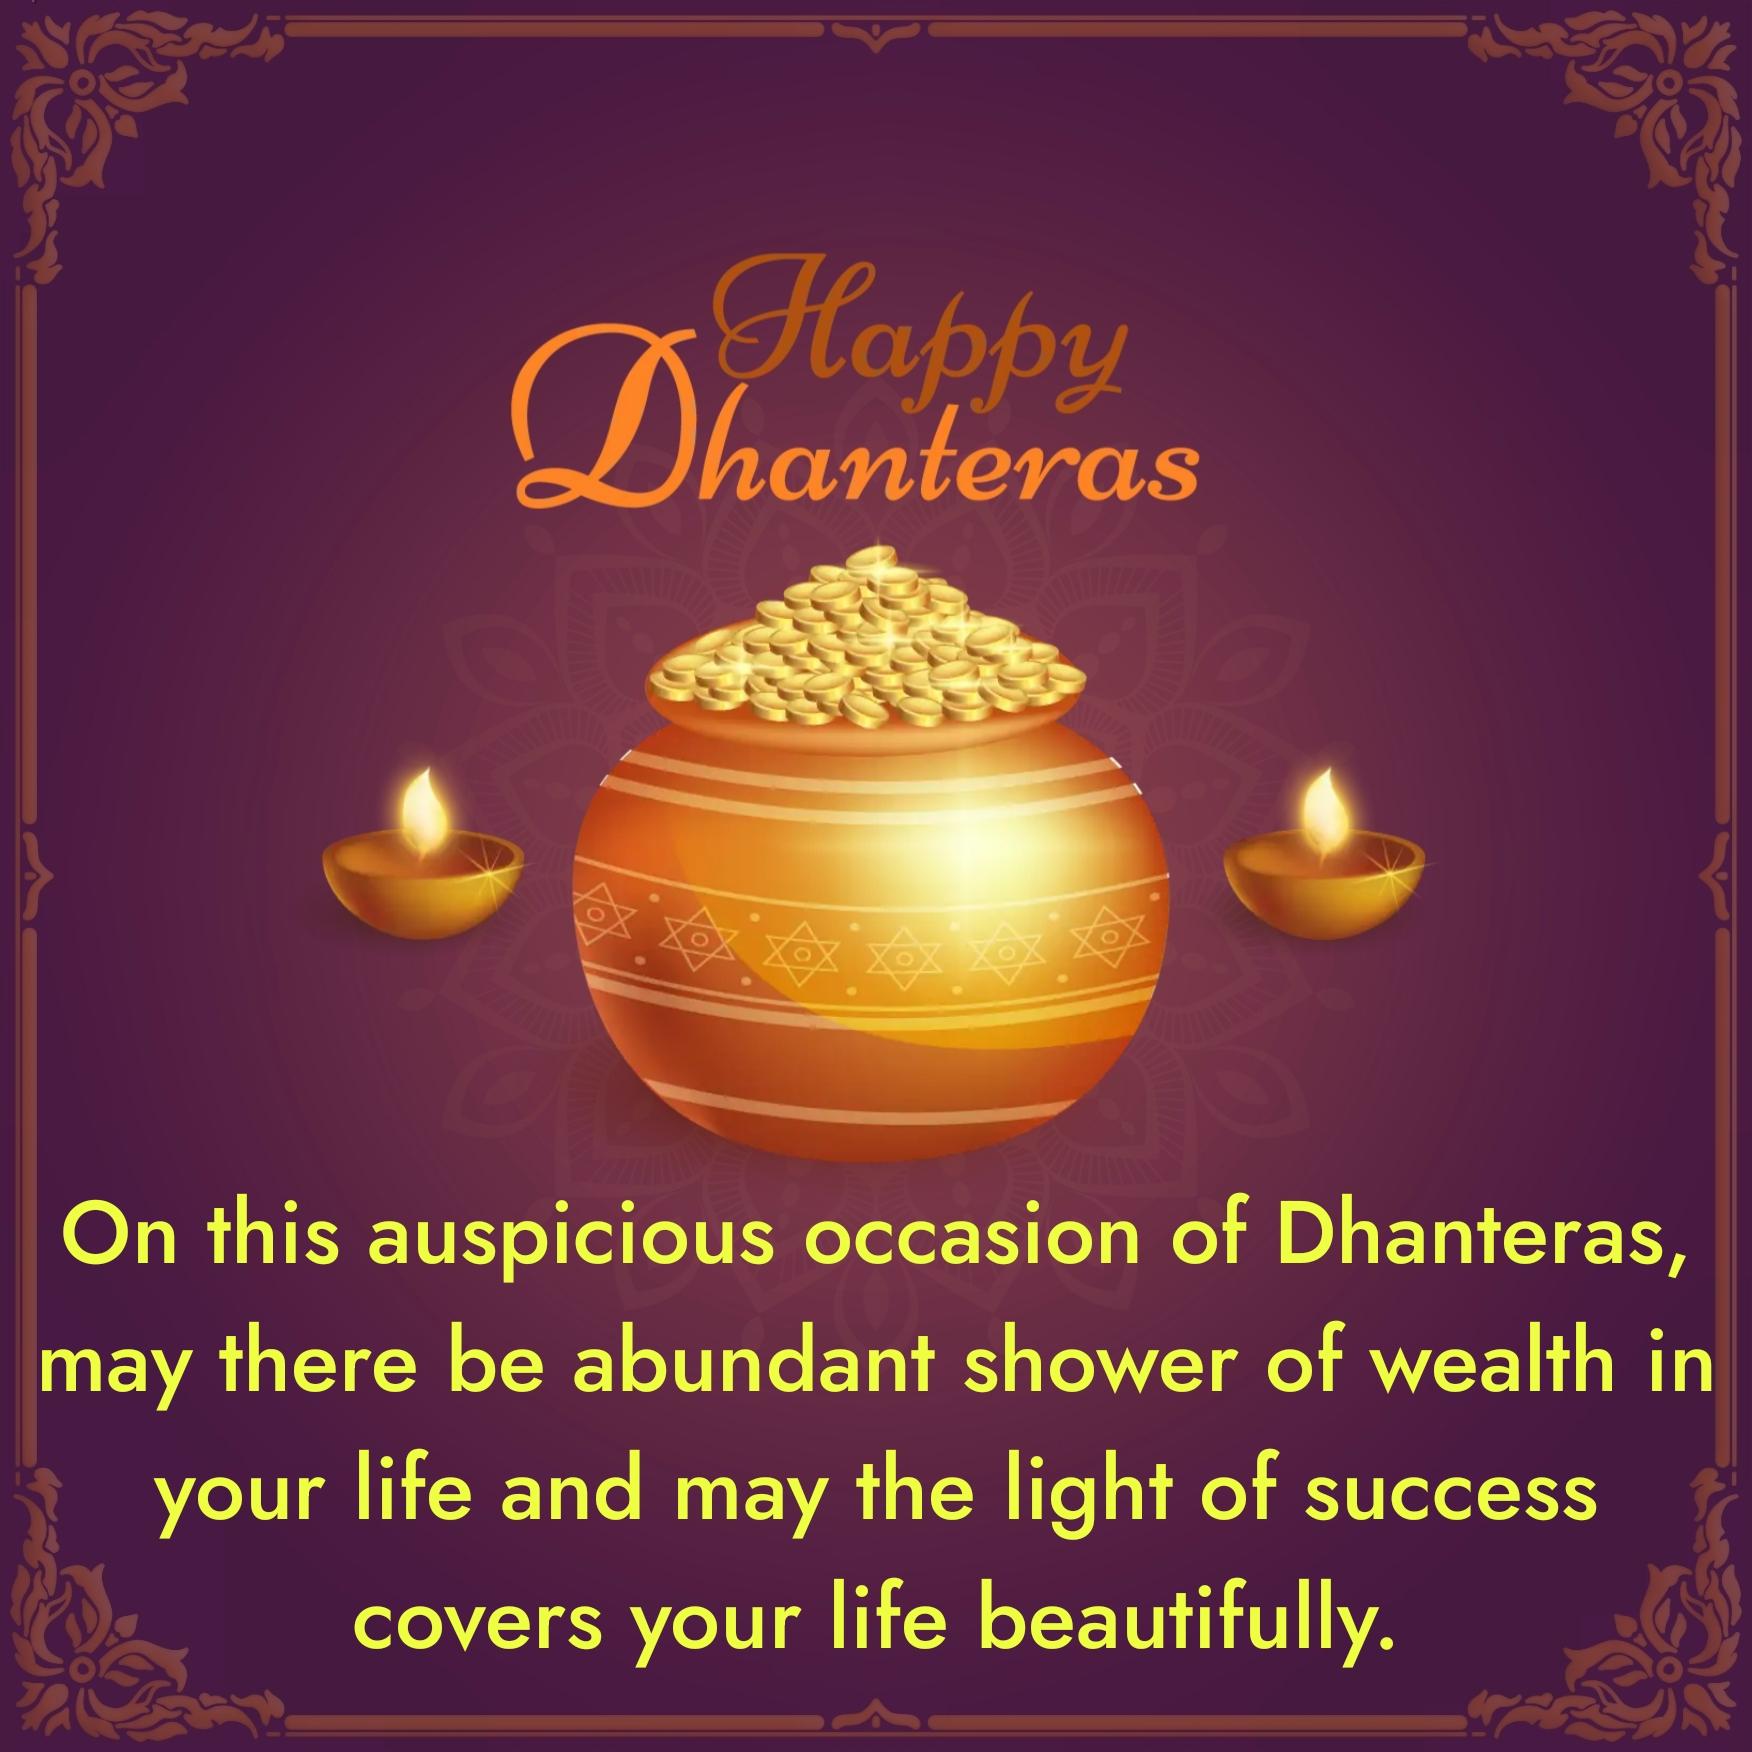 On this auspicious occasion of Dhanteras